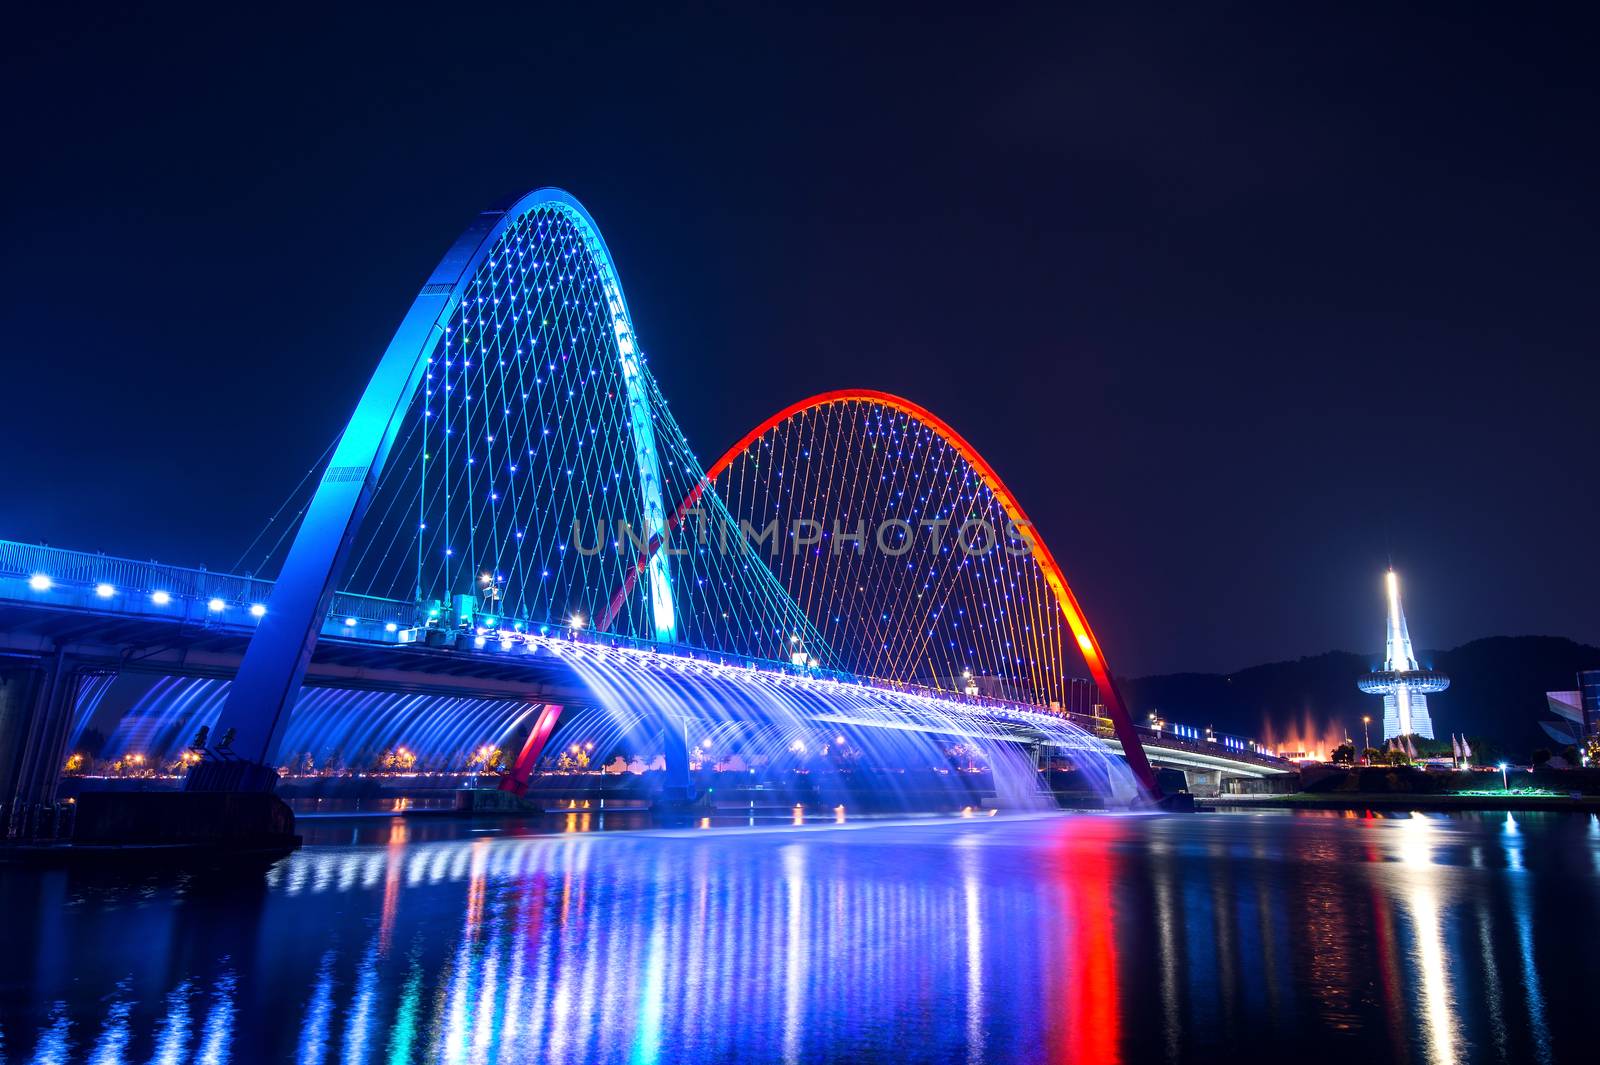 Rainbow fountain show at Expo Bridge in South Korea. by gutarphotoghaphy